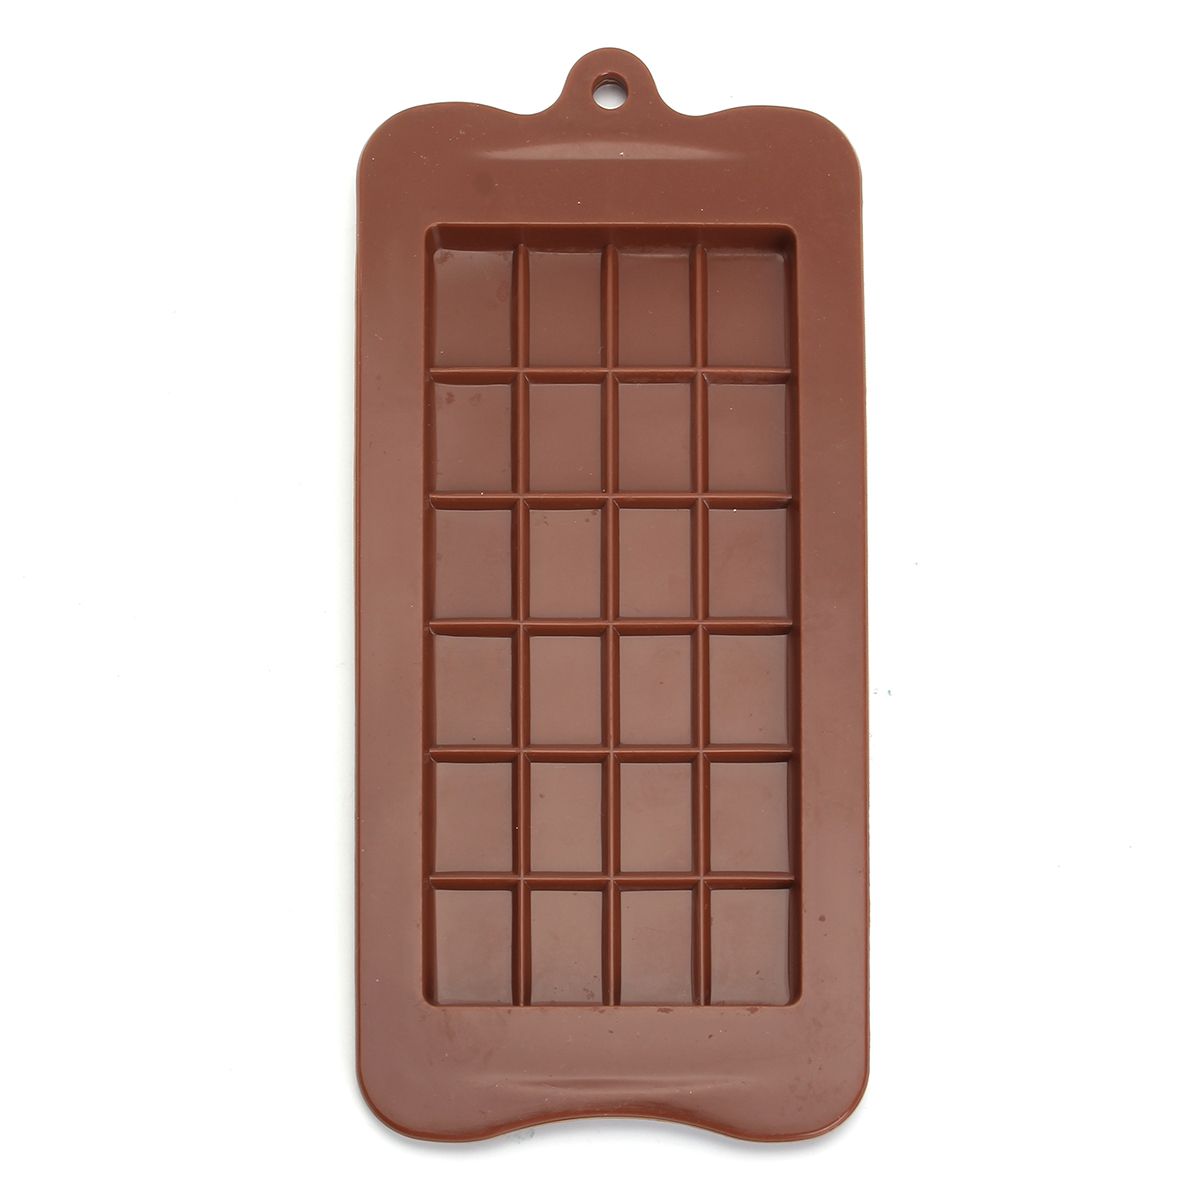 Chocolate-Mold-Mould-Bar-Break-Apart-Choc-Block-Ice-Tray-Silicone-Cake-Baking-Mold-1443733